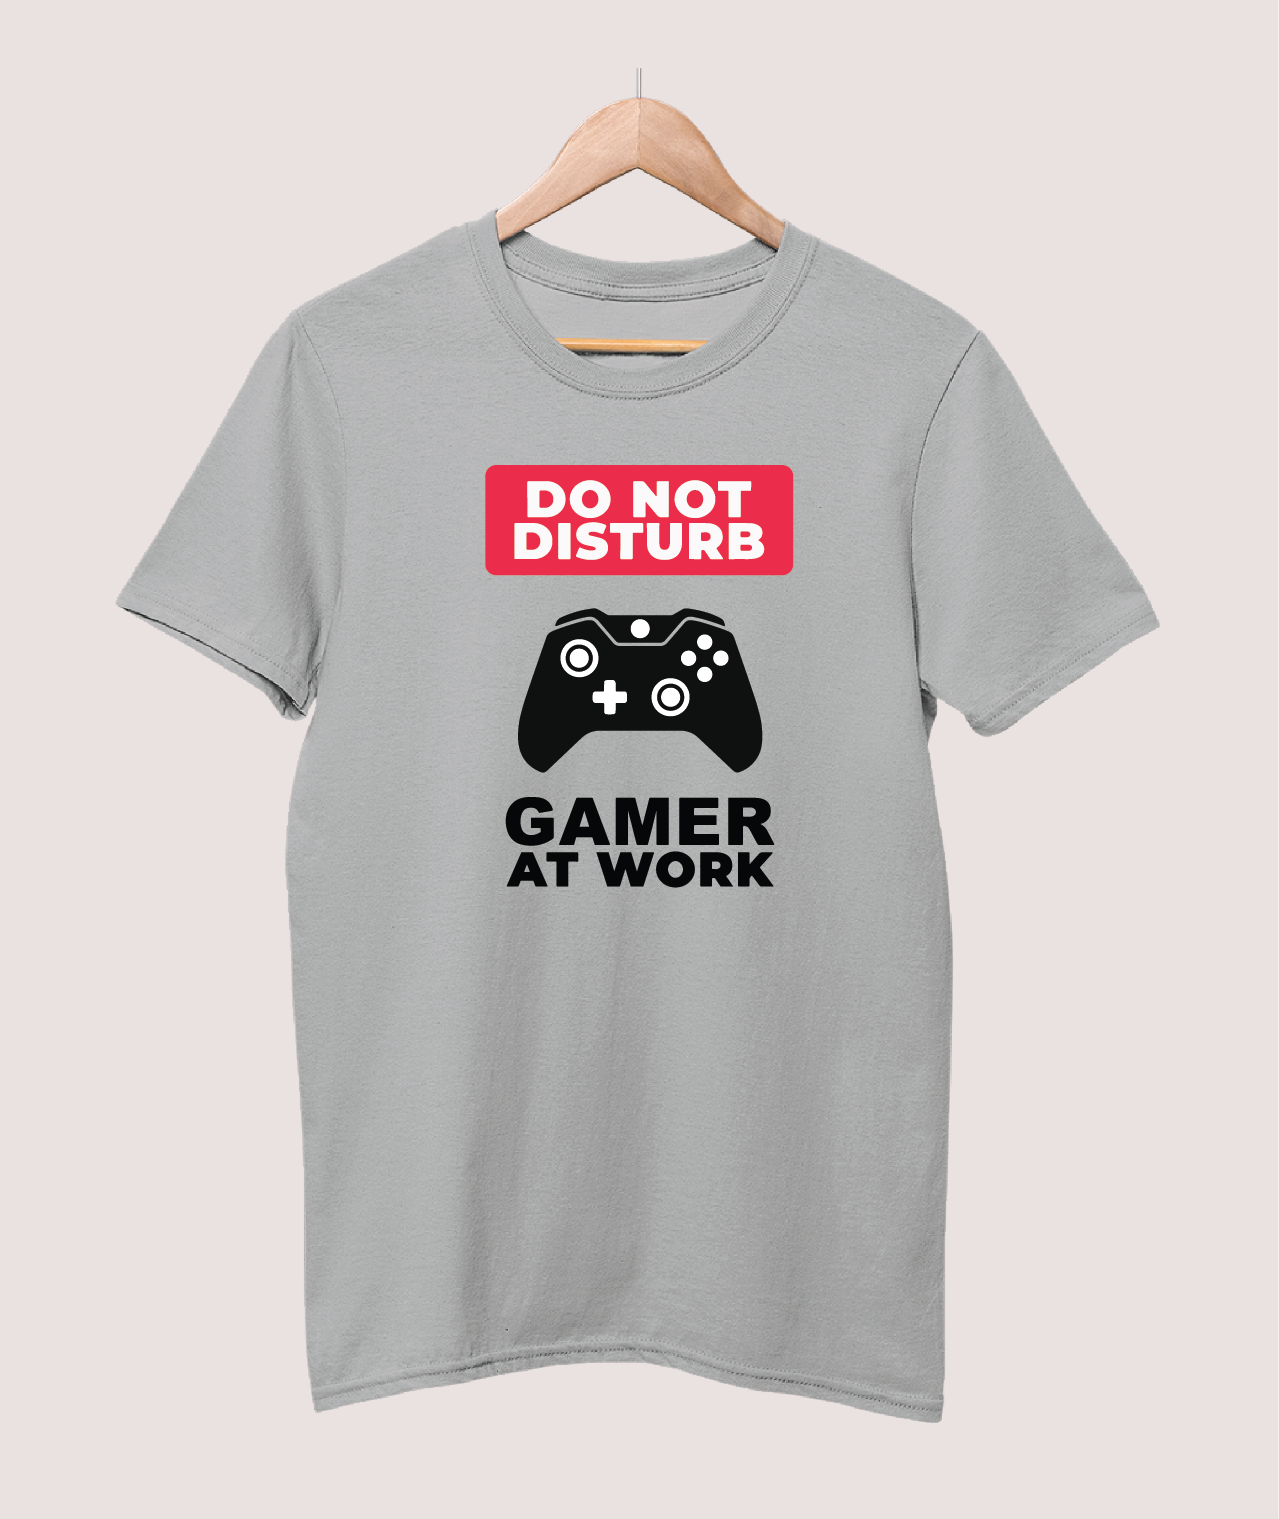 Do not disturb gaming T-shirt